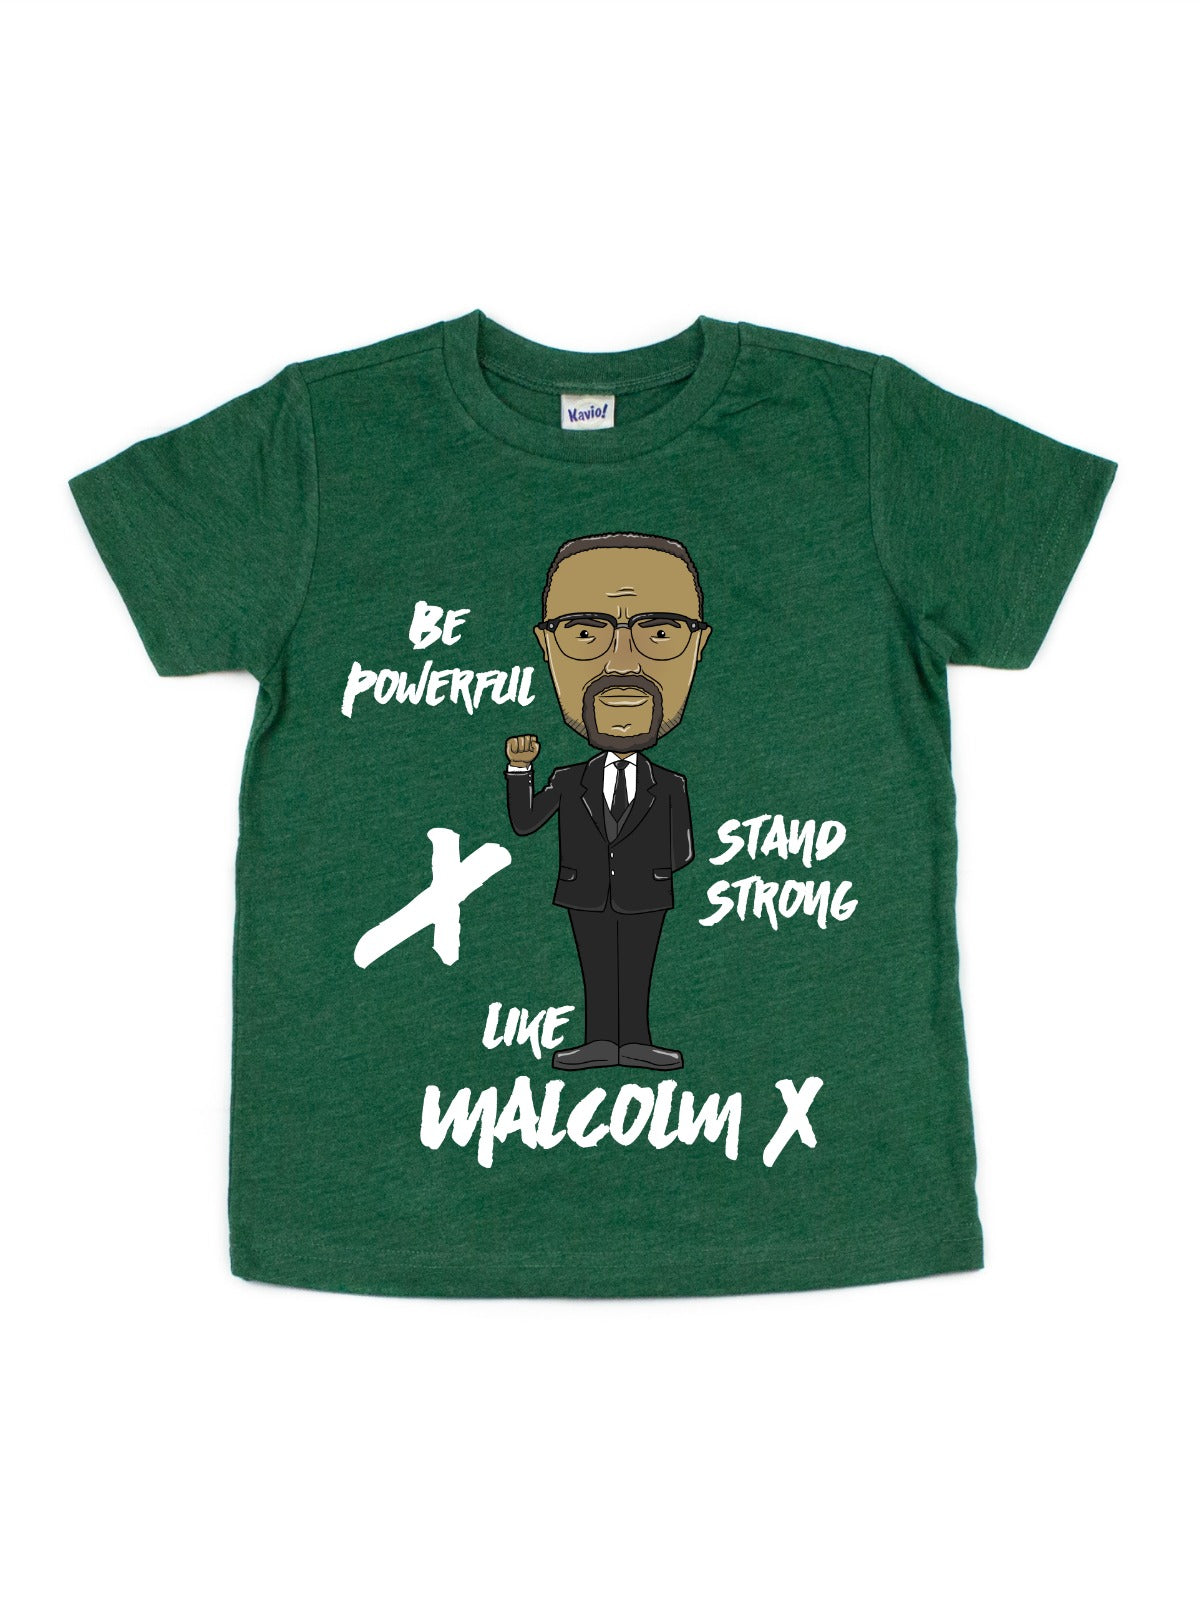 Kids Malcolm X black history shirt